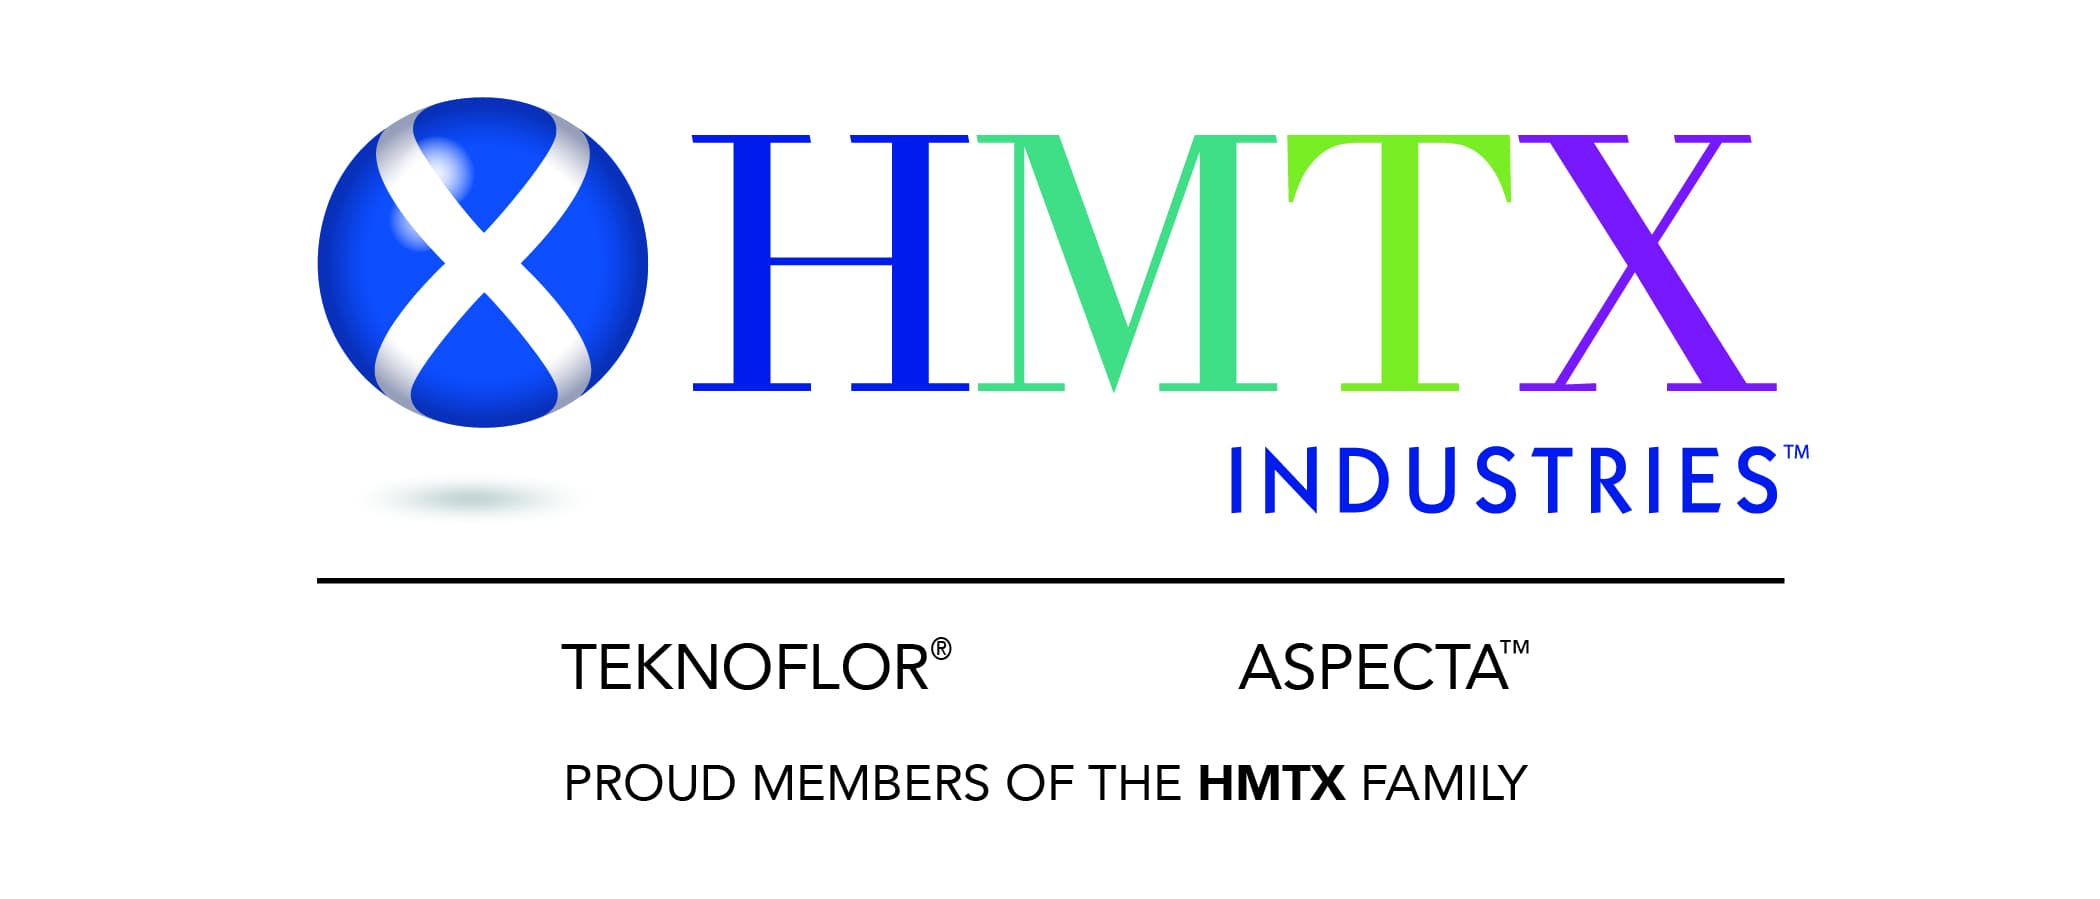 HMTX Industries Teknoflor Aspecta Proud Members of the HMTX Family Logo